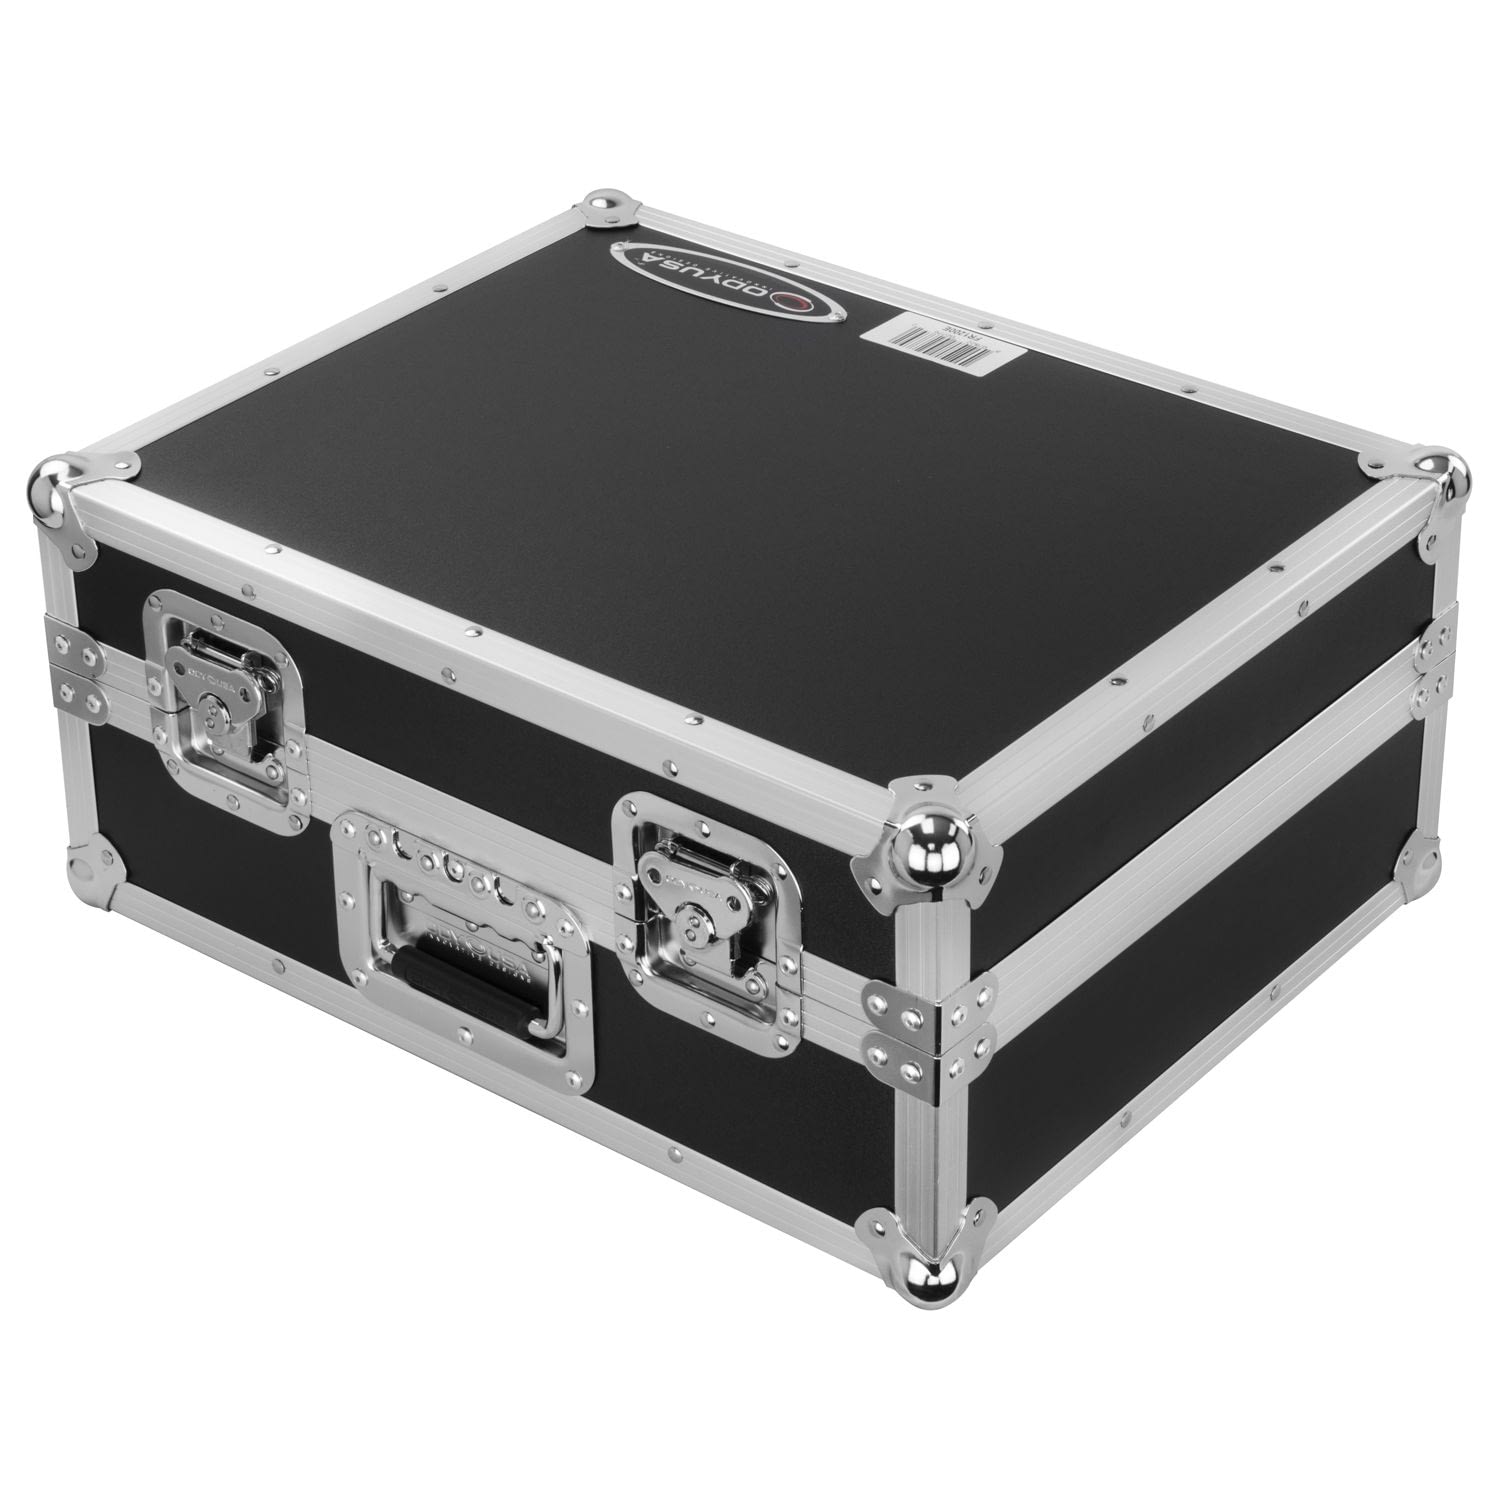 Reloop RP-2000 MK2 Dual DJ Turntable Package with Cases - Hollywood DJ